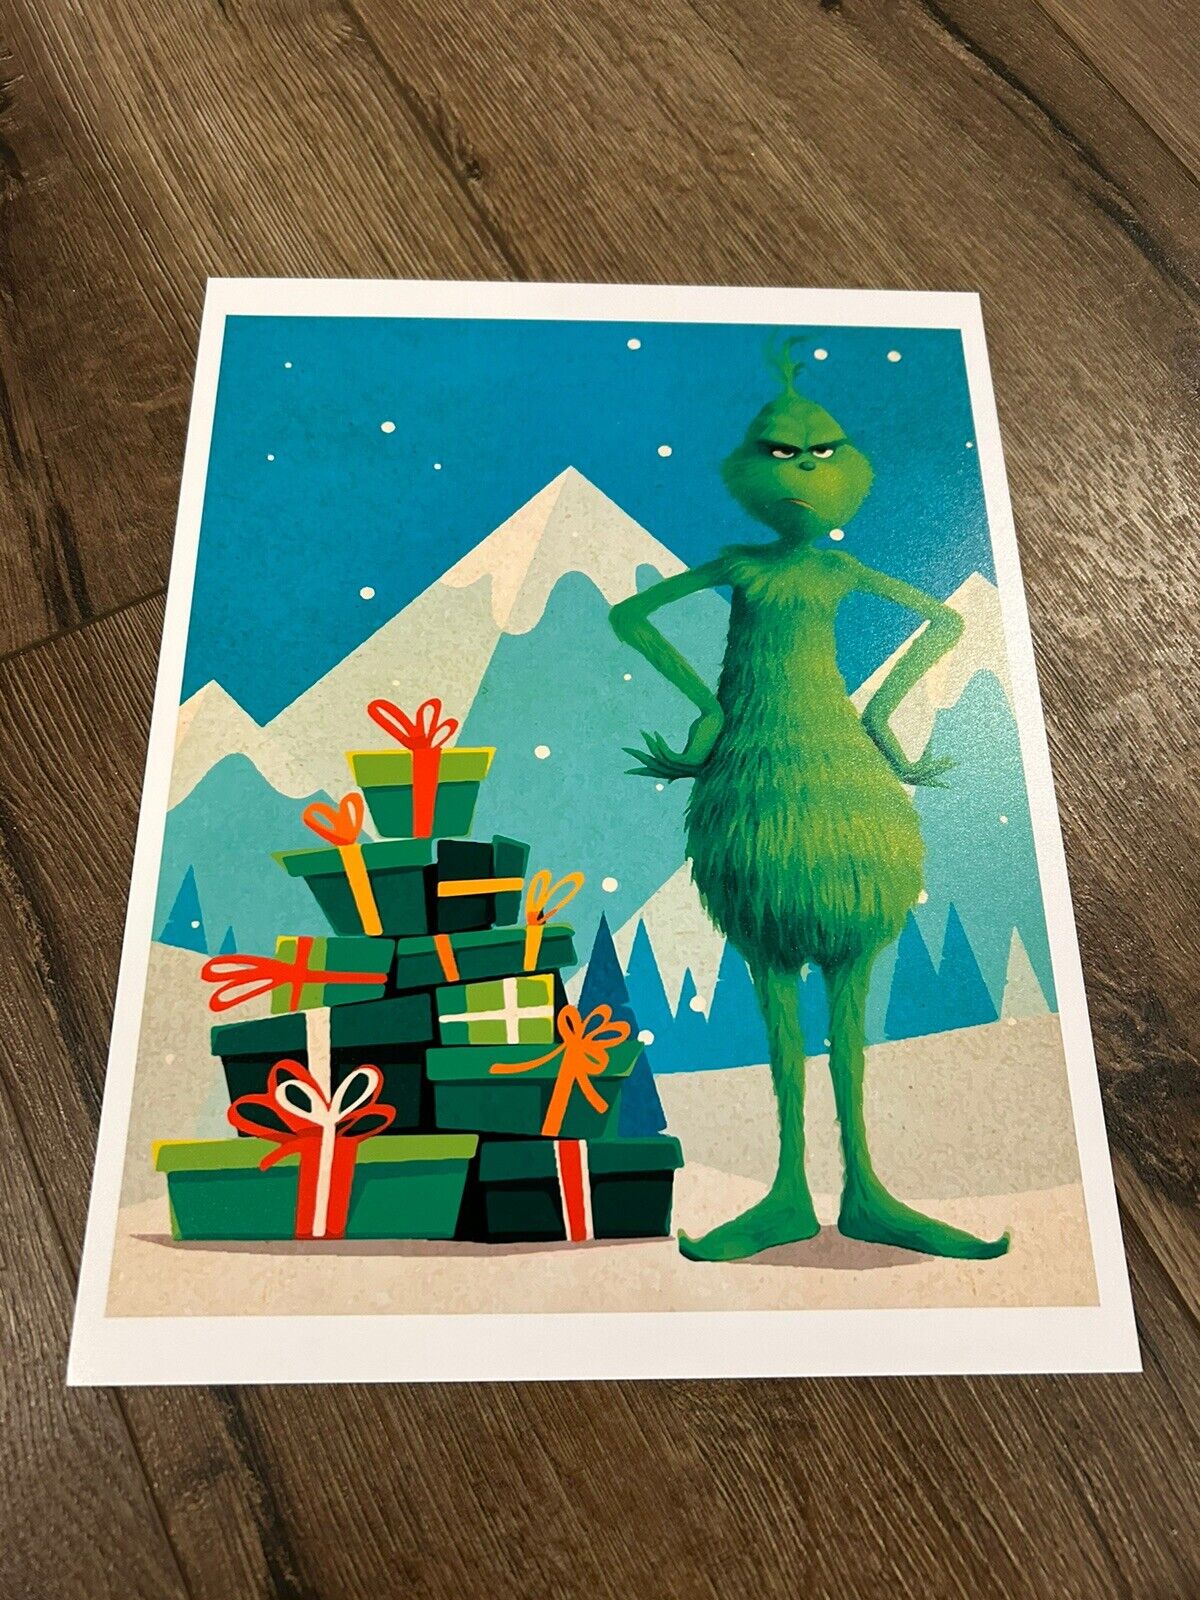 GRINCH CHRISTMAS Art Print Photo 8” x10” Poster Holiday Santa Clause Presents